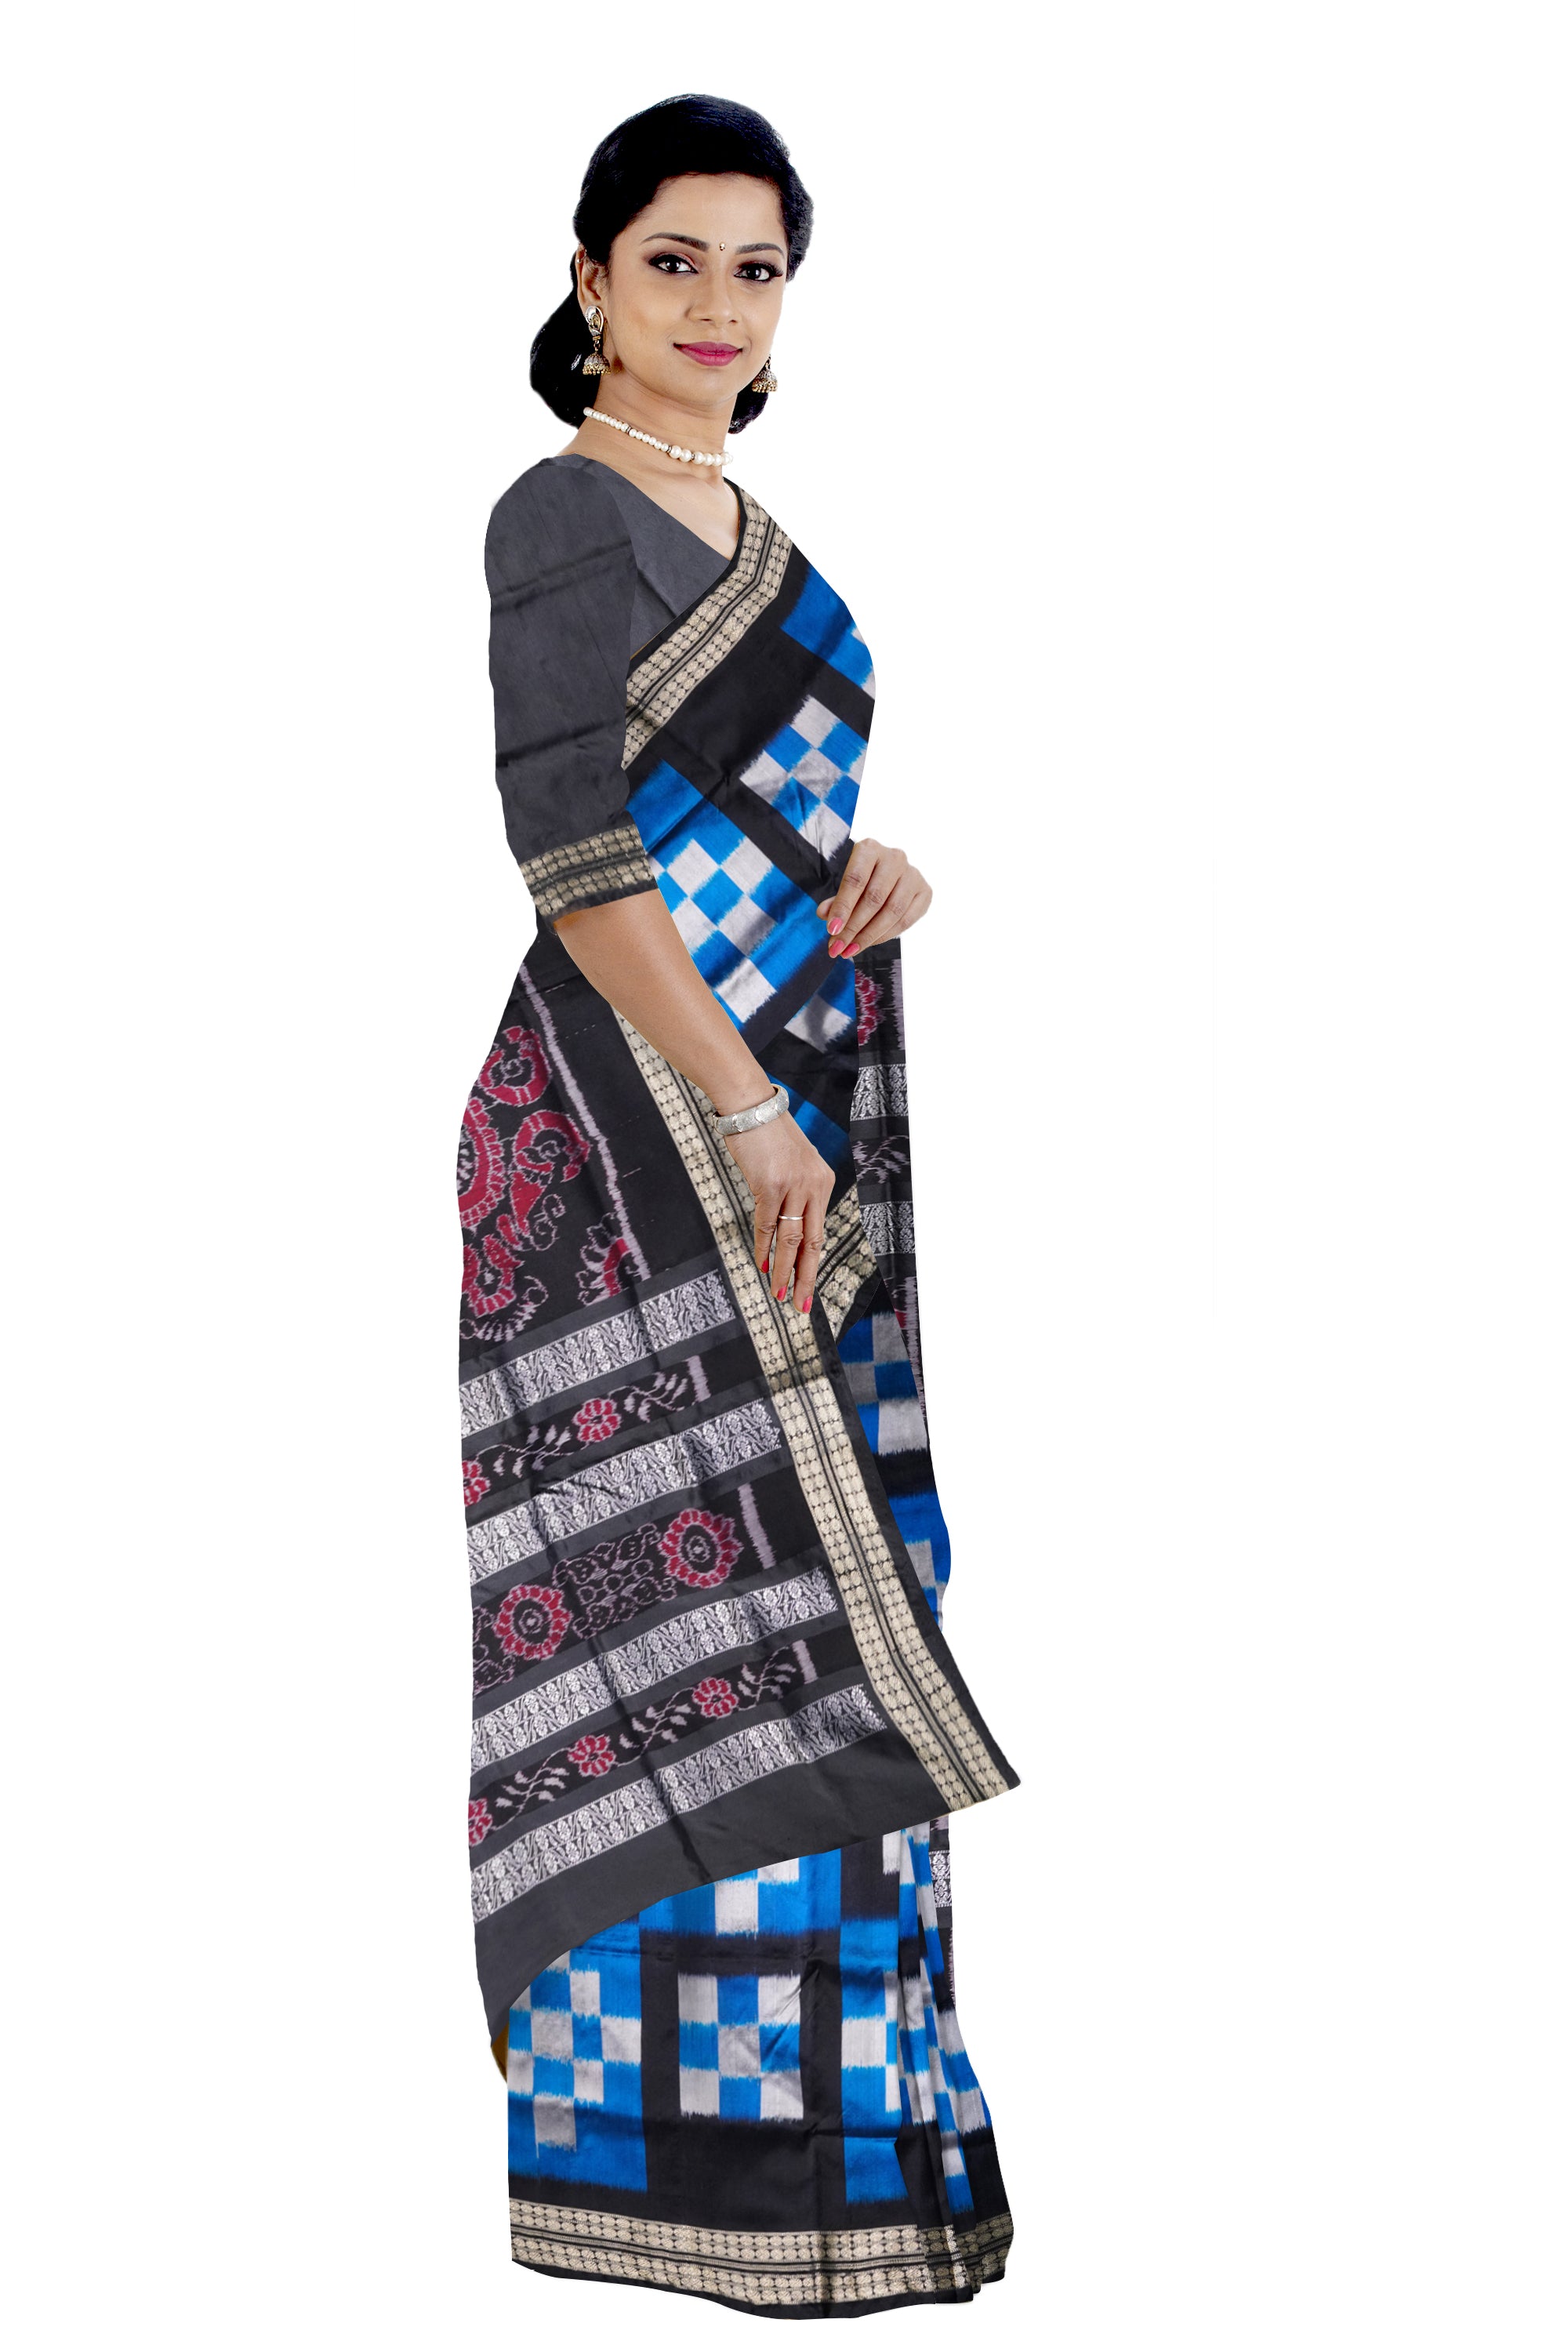 Blue and black color pasapali pata saree. - Koshali Arts & Crafts Enterprise